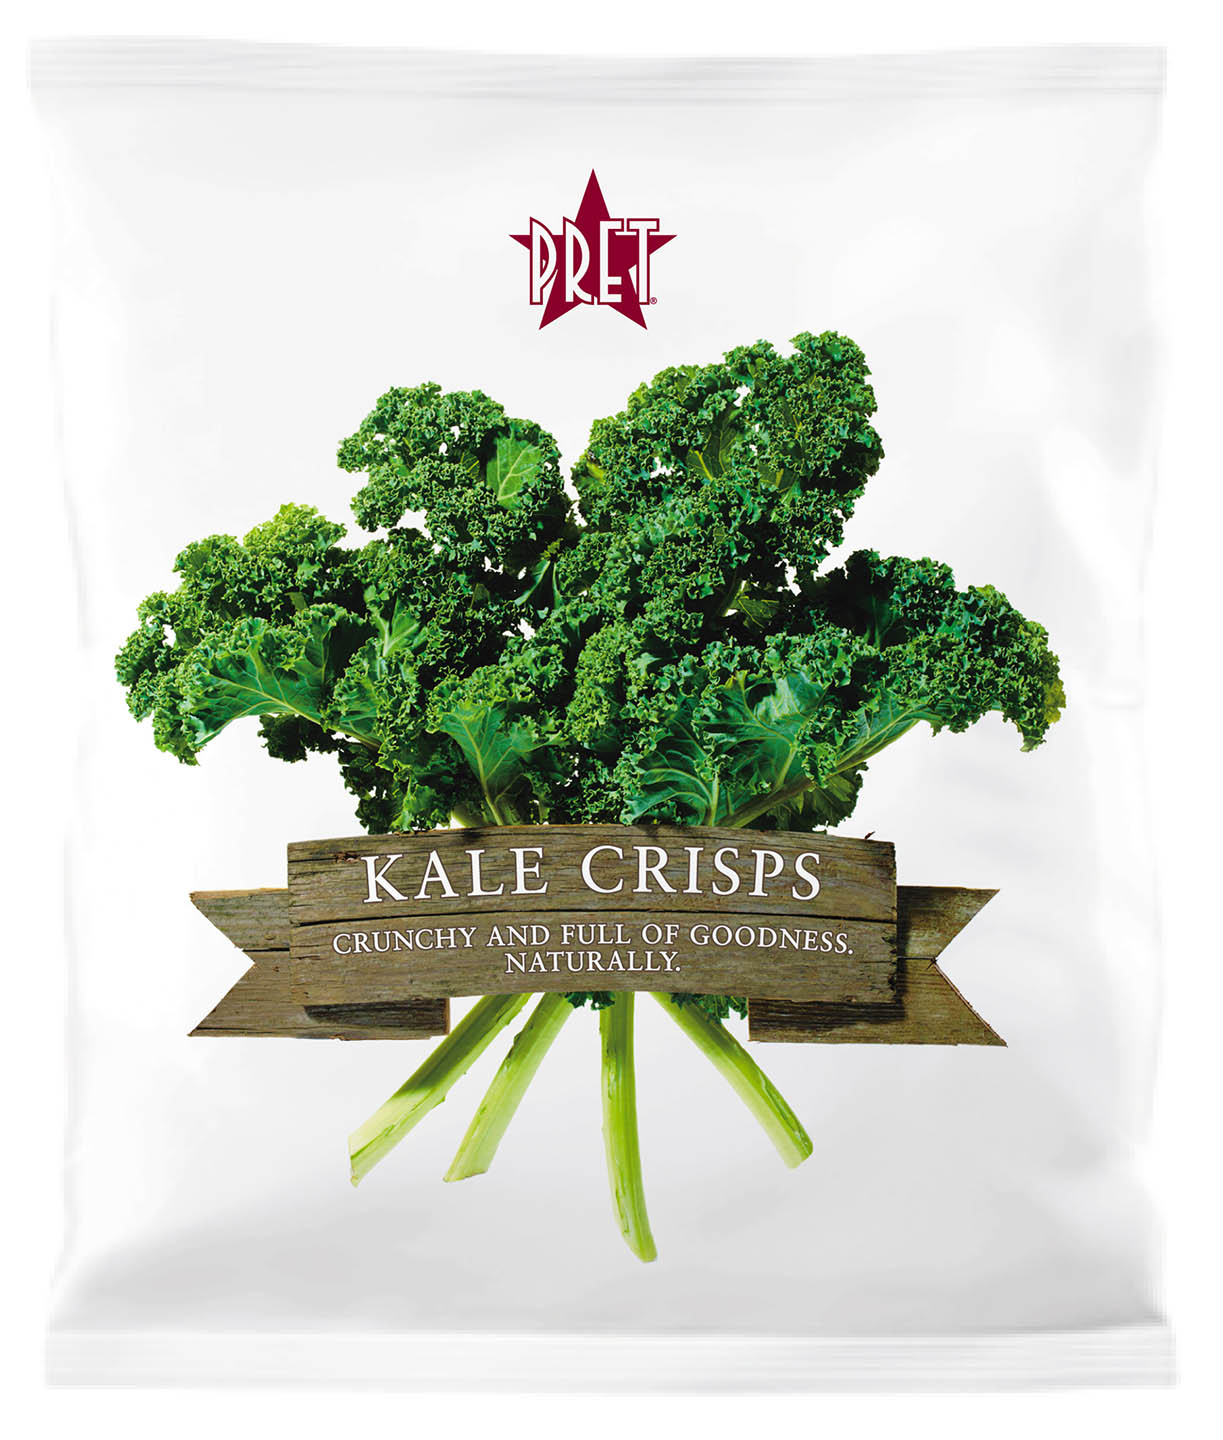 Kale crisps web.jpg